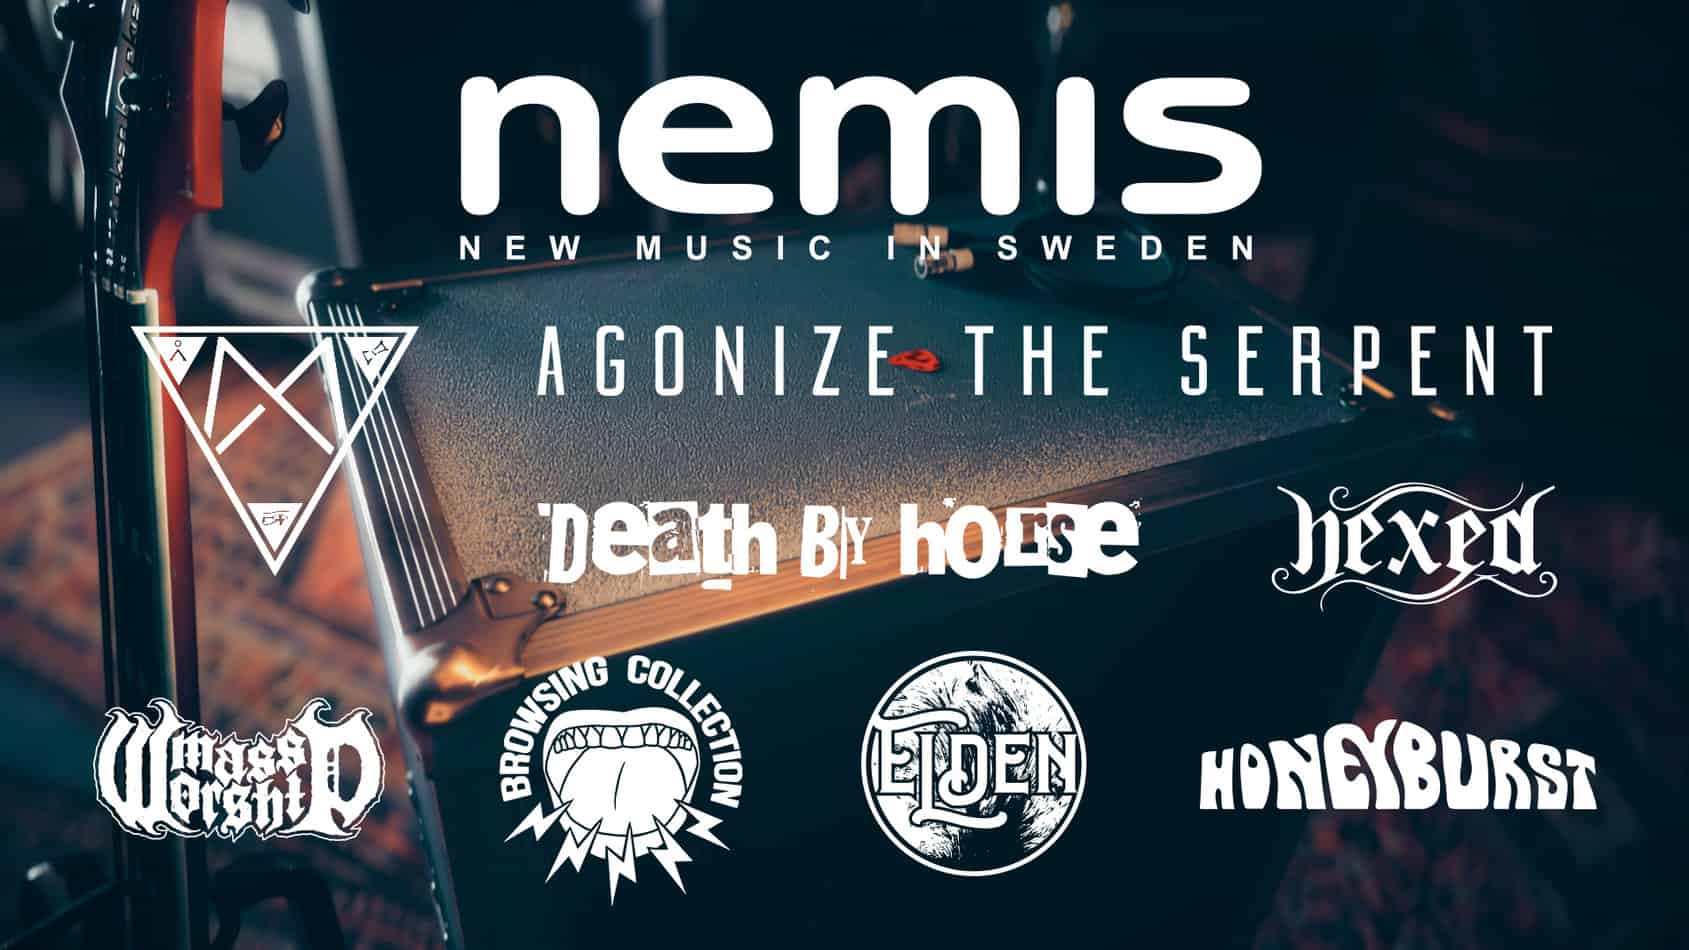 SWEDEN ROCK 2020 NEMIS Bands (News)